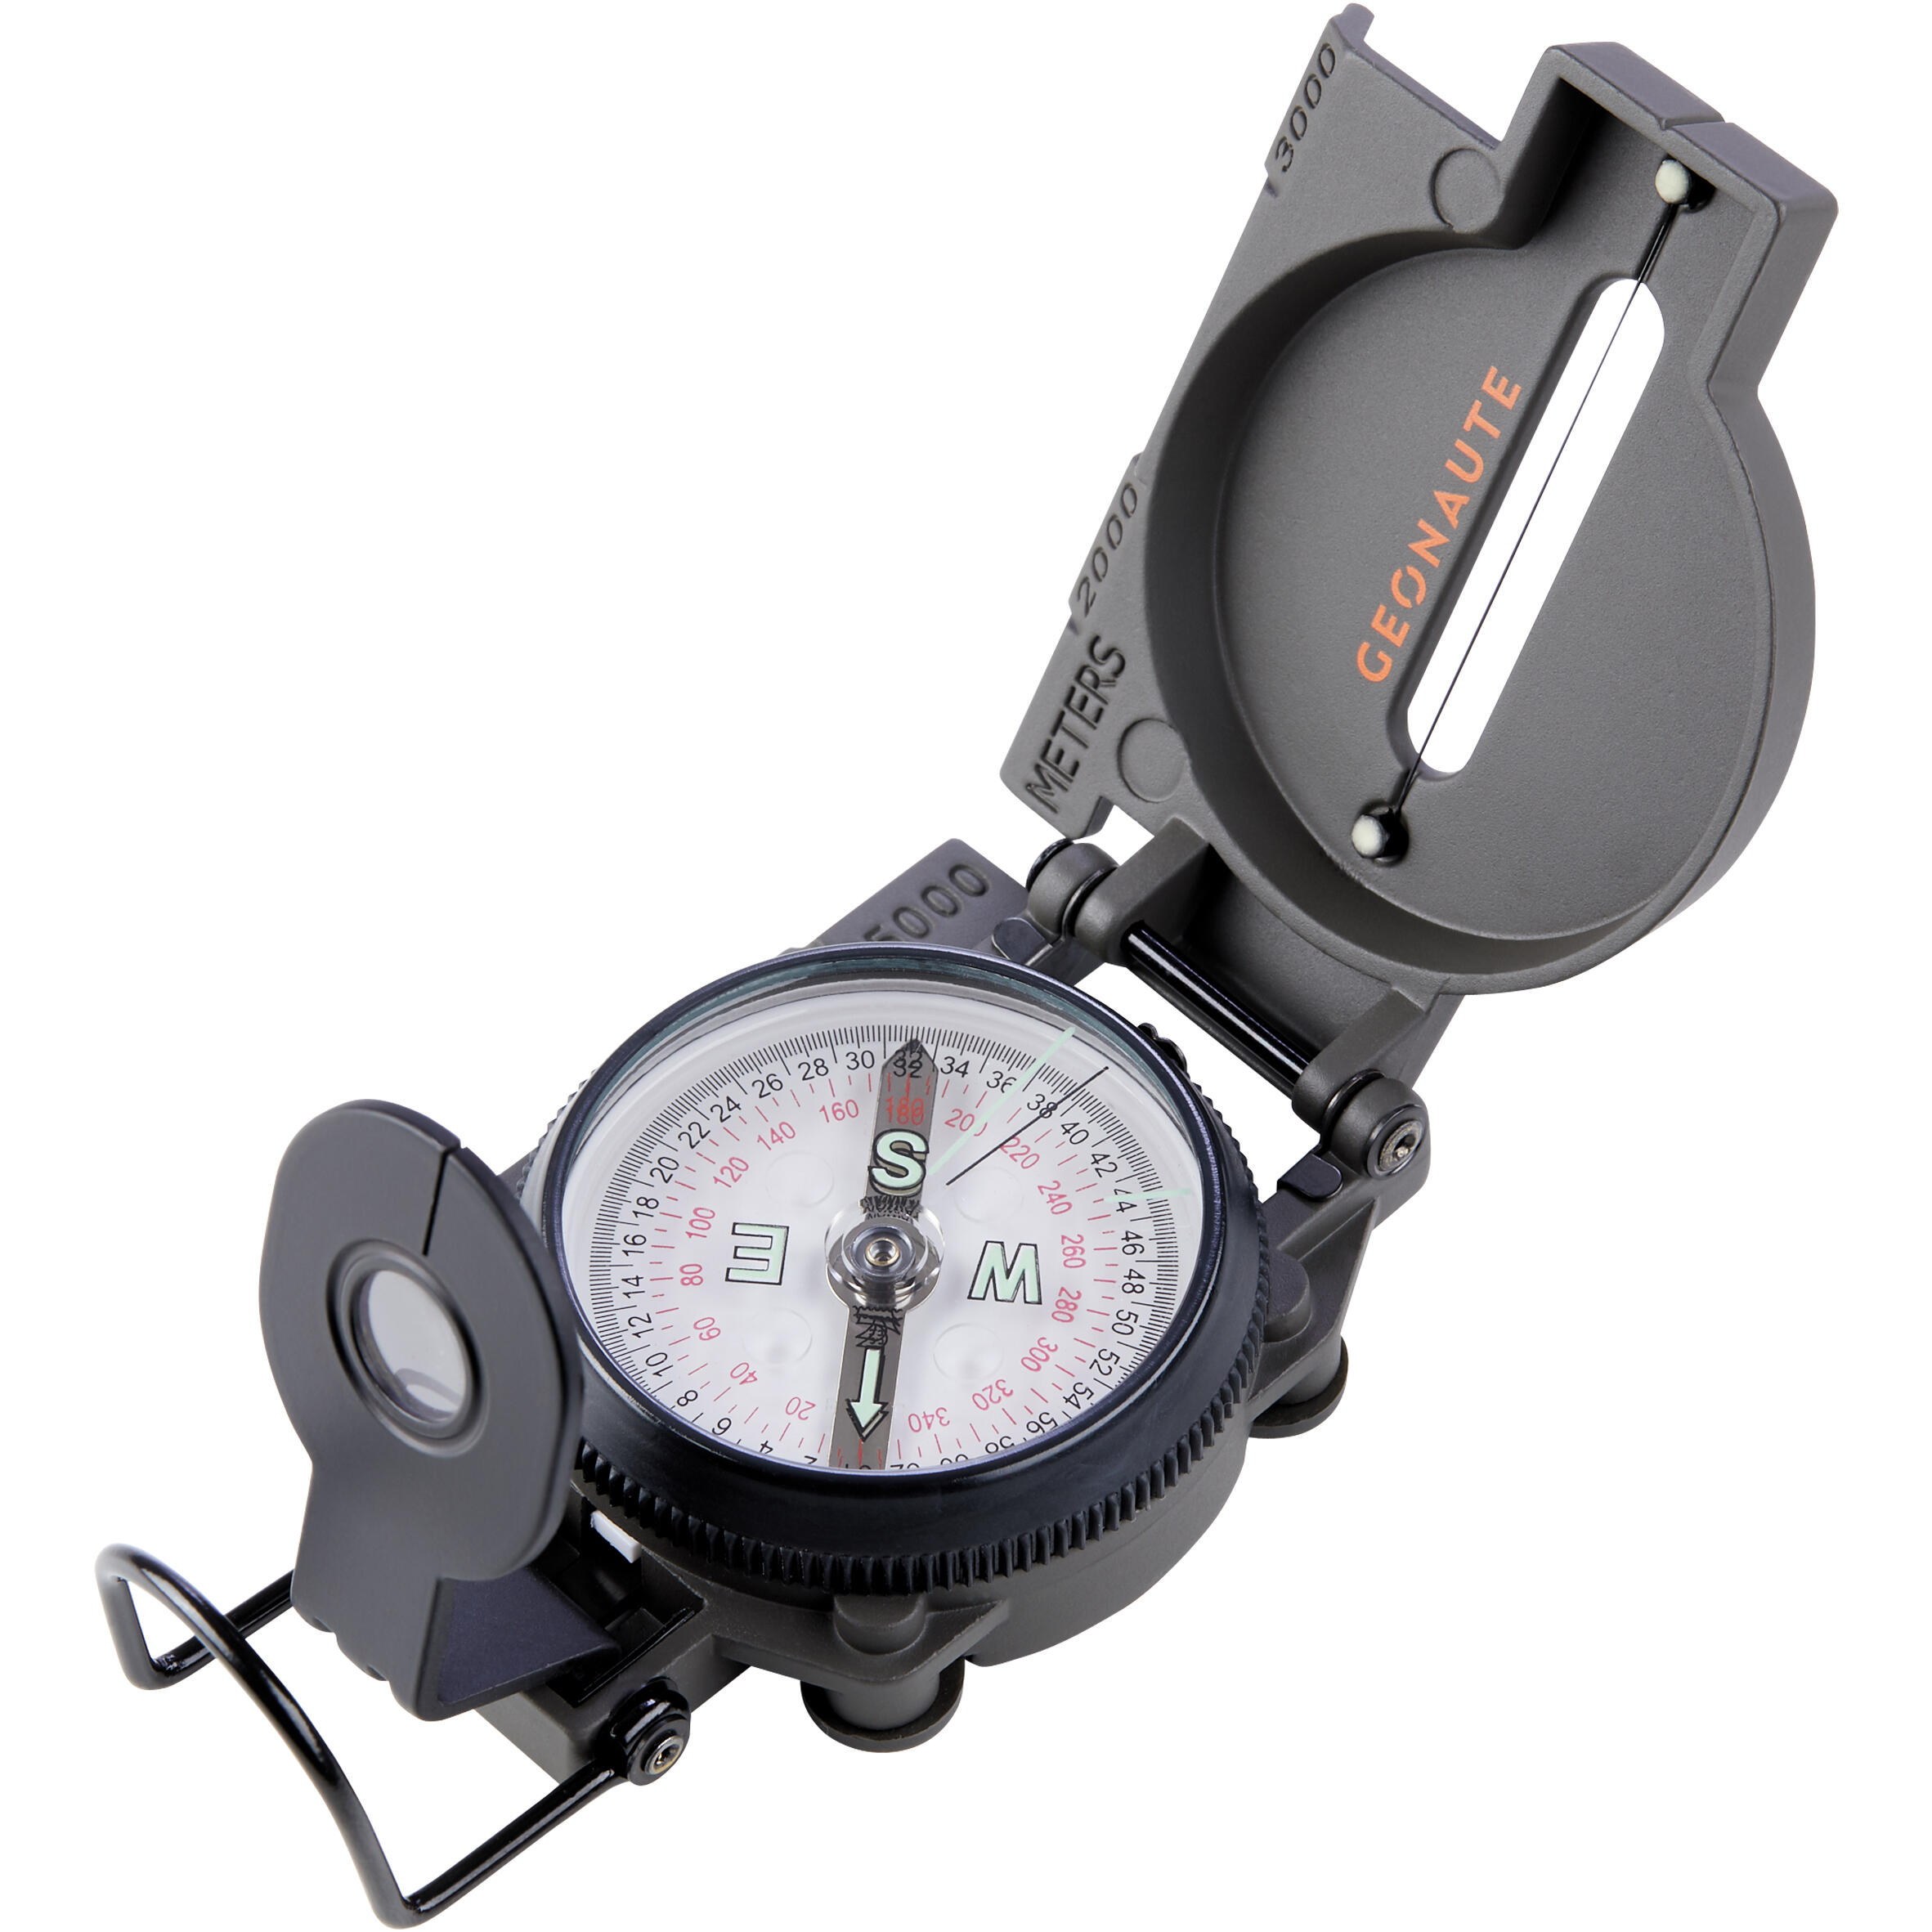 C400 sighting compass - khaki - Decathlon